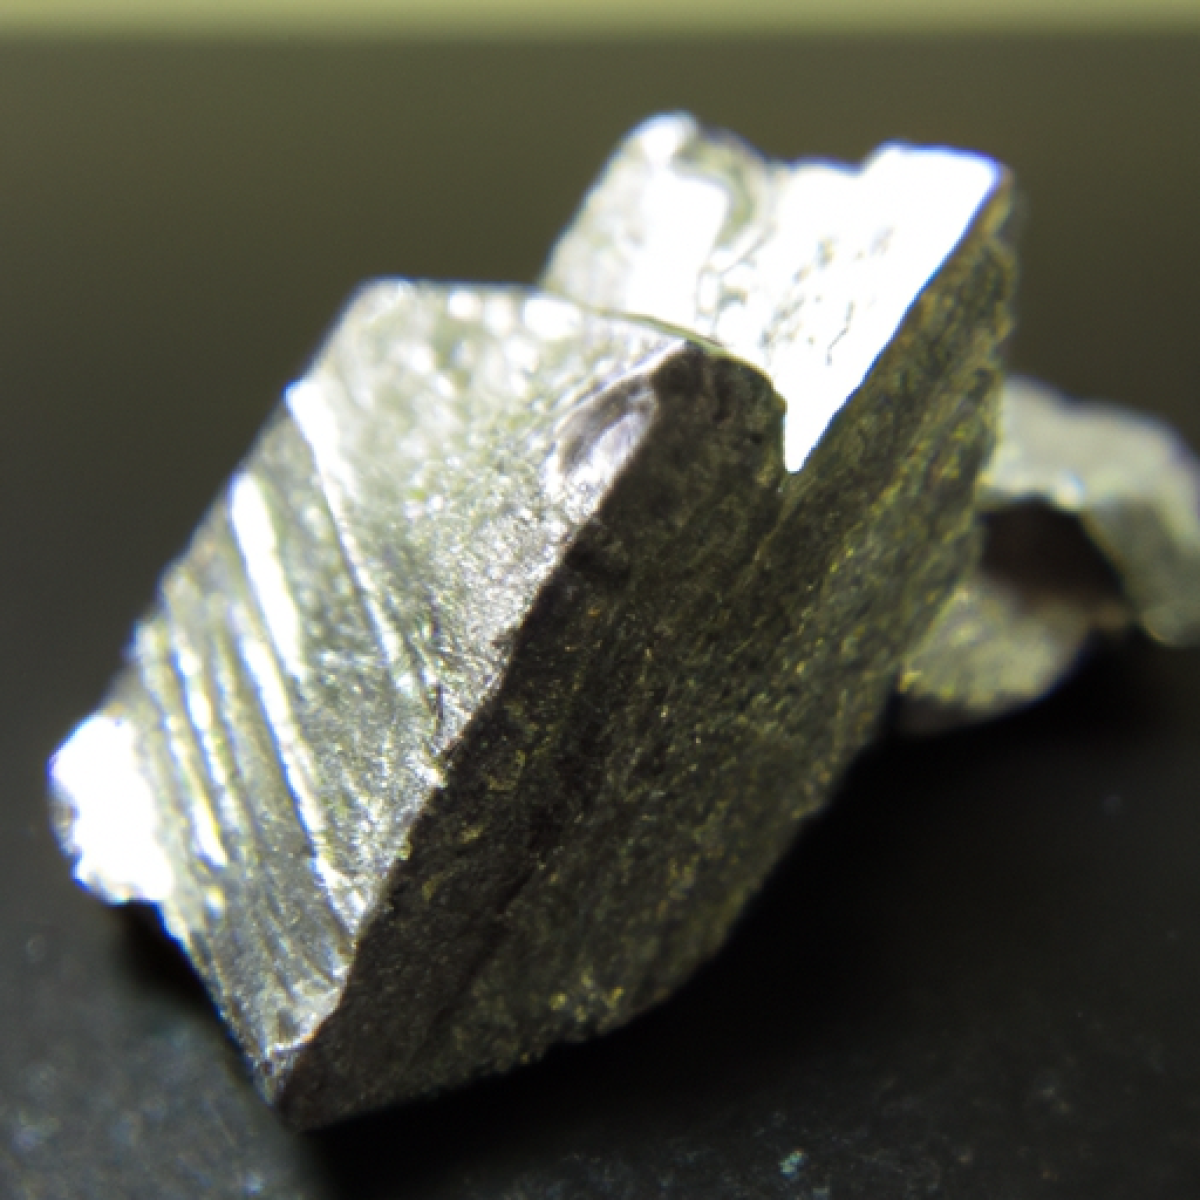 A detail image related to the topic: Silicato de aluminio